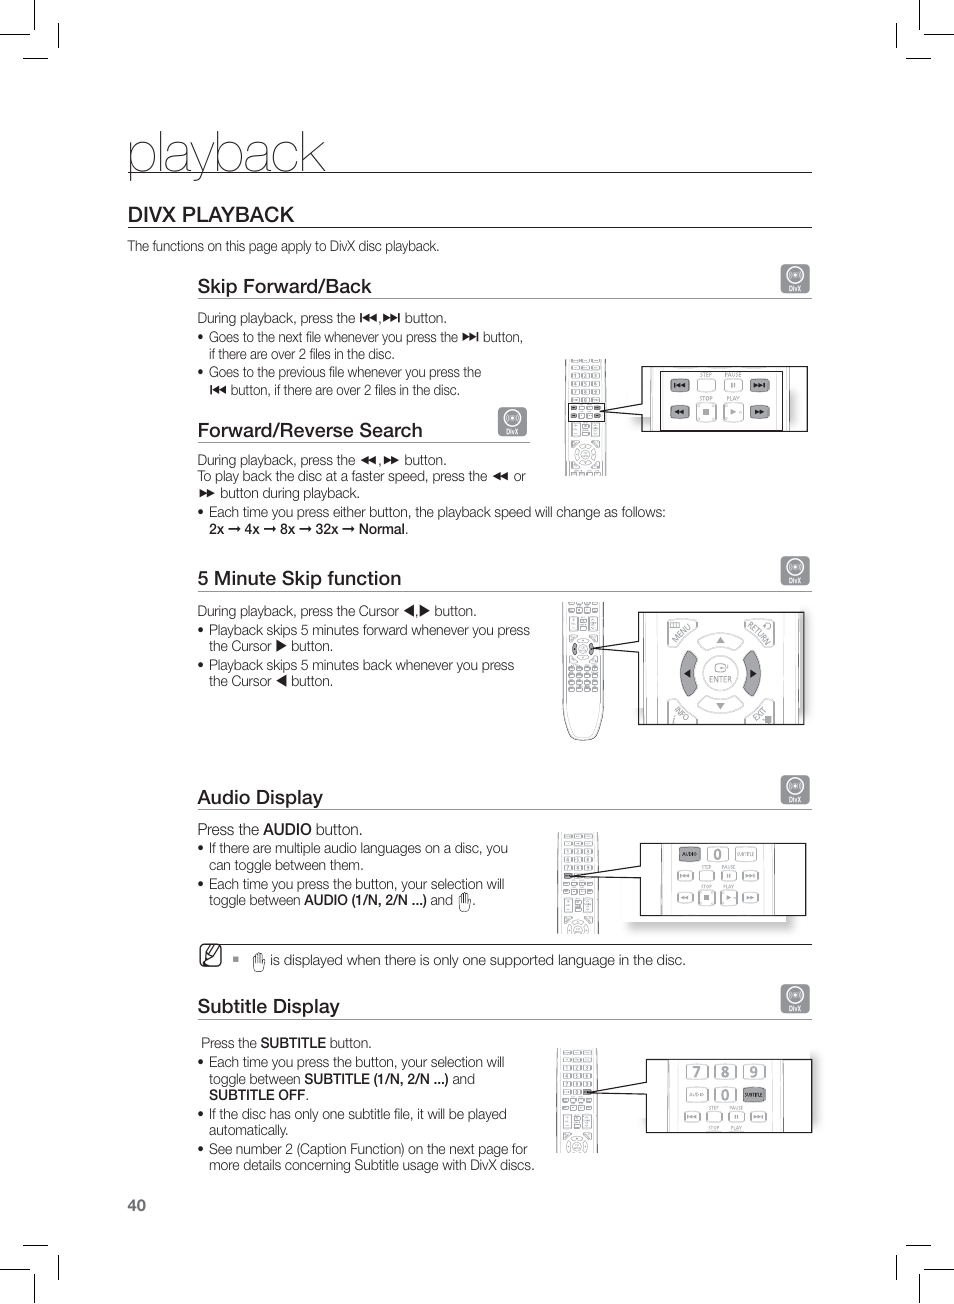 Playback, Divx playback | Samsung HT-Z420T-XAA User Manual | Page 40 / 78